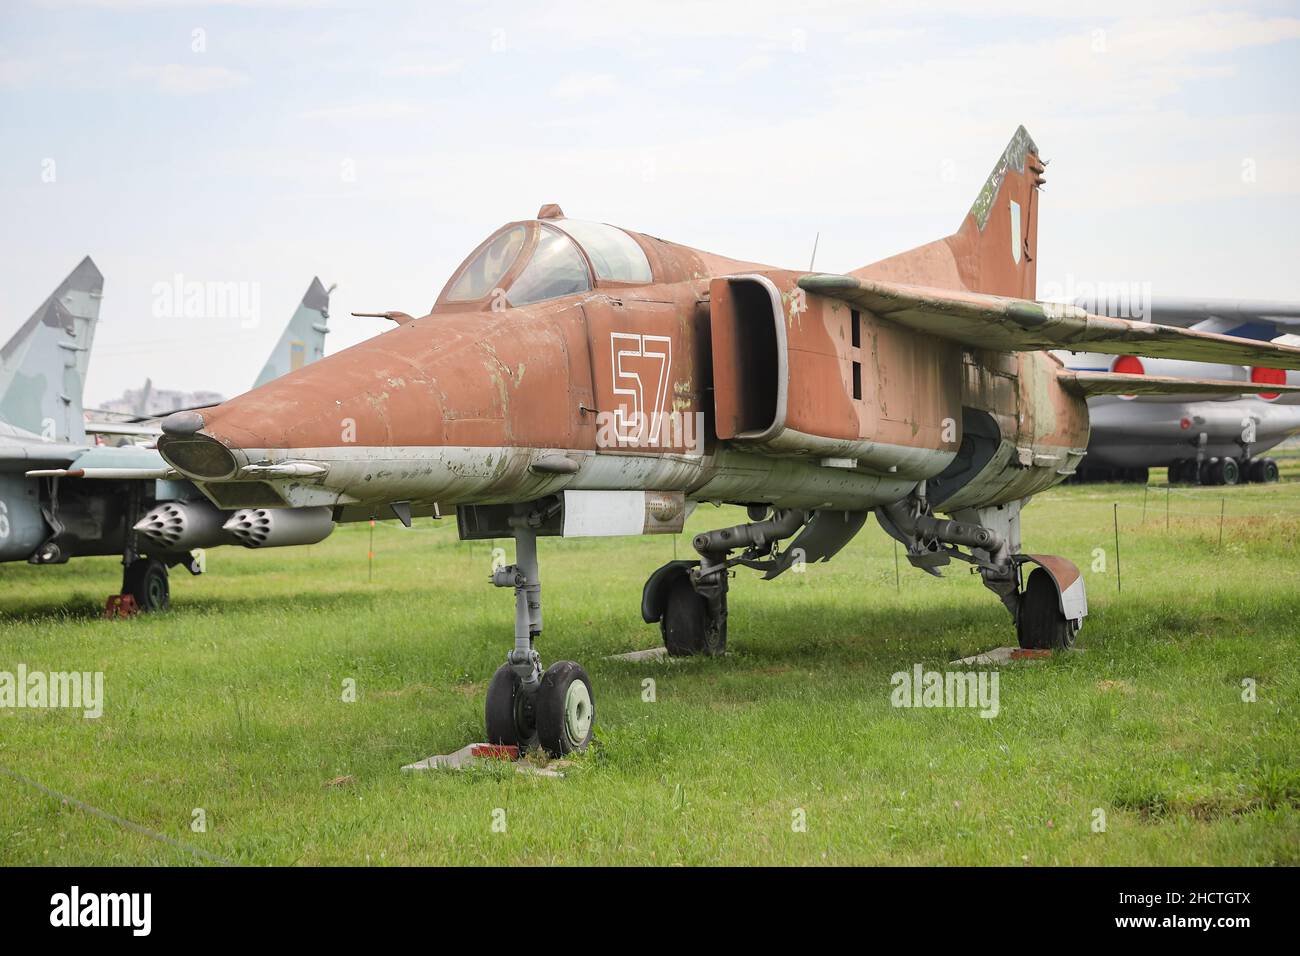 KIEV, UKRAINE - AUGUST 01, 2021: Ukrainian Air Force Mikoyan-Gurevich MiG-27 Flogger displayed at Oleg Antonov State Aviation Museum Stock Photo